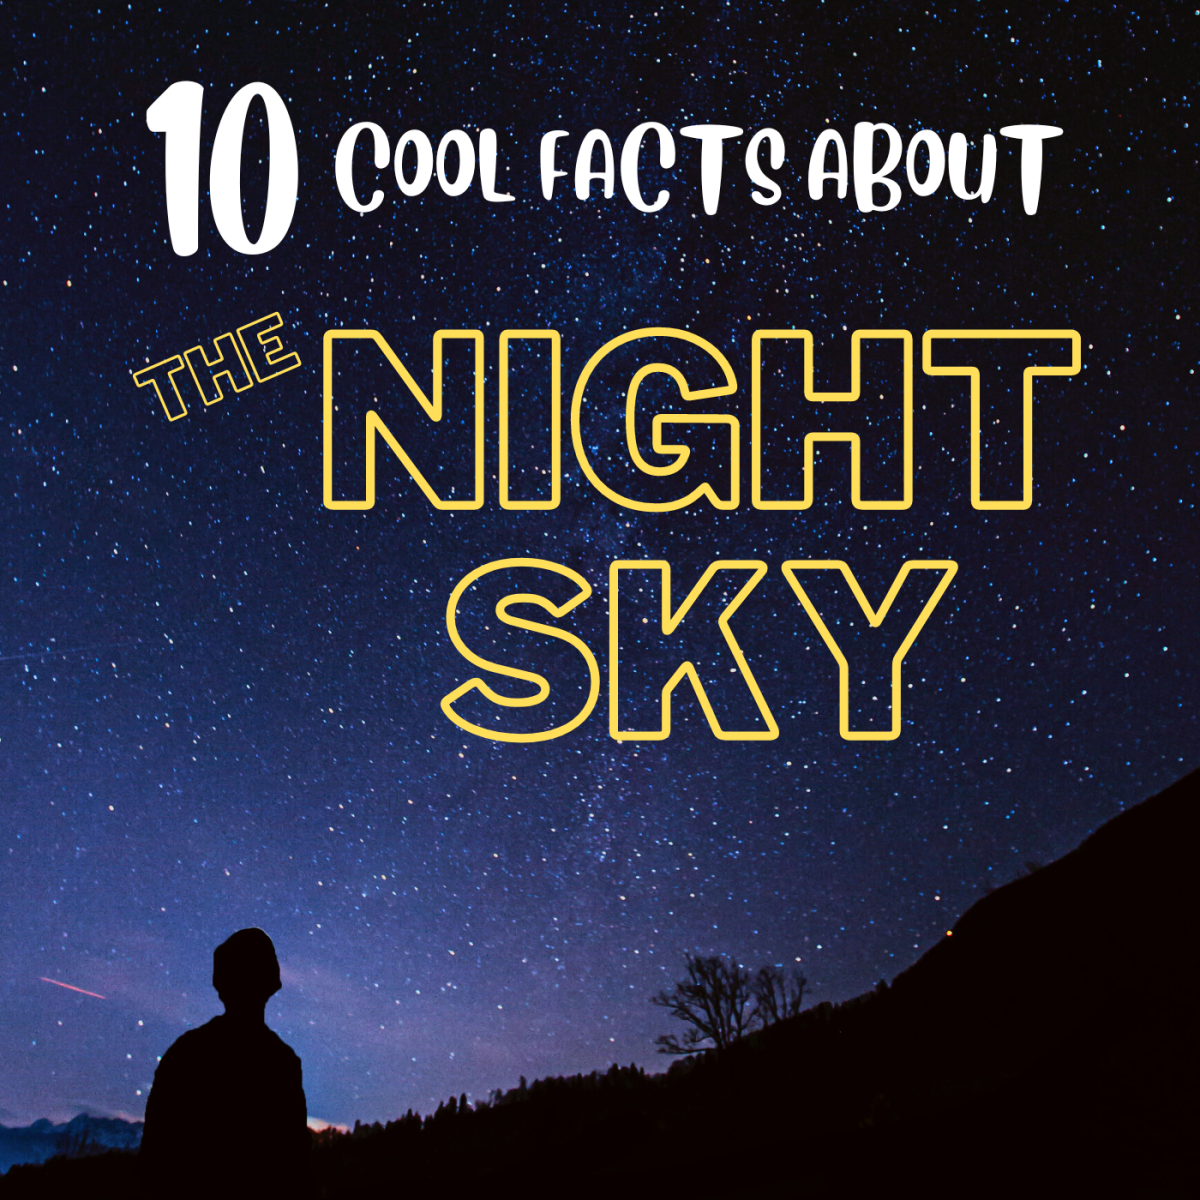 Interesting night sky facts